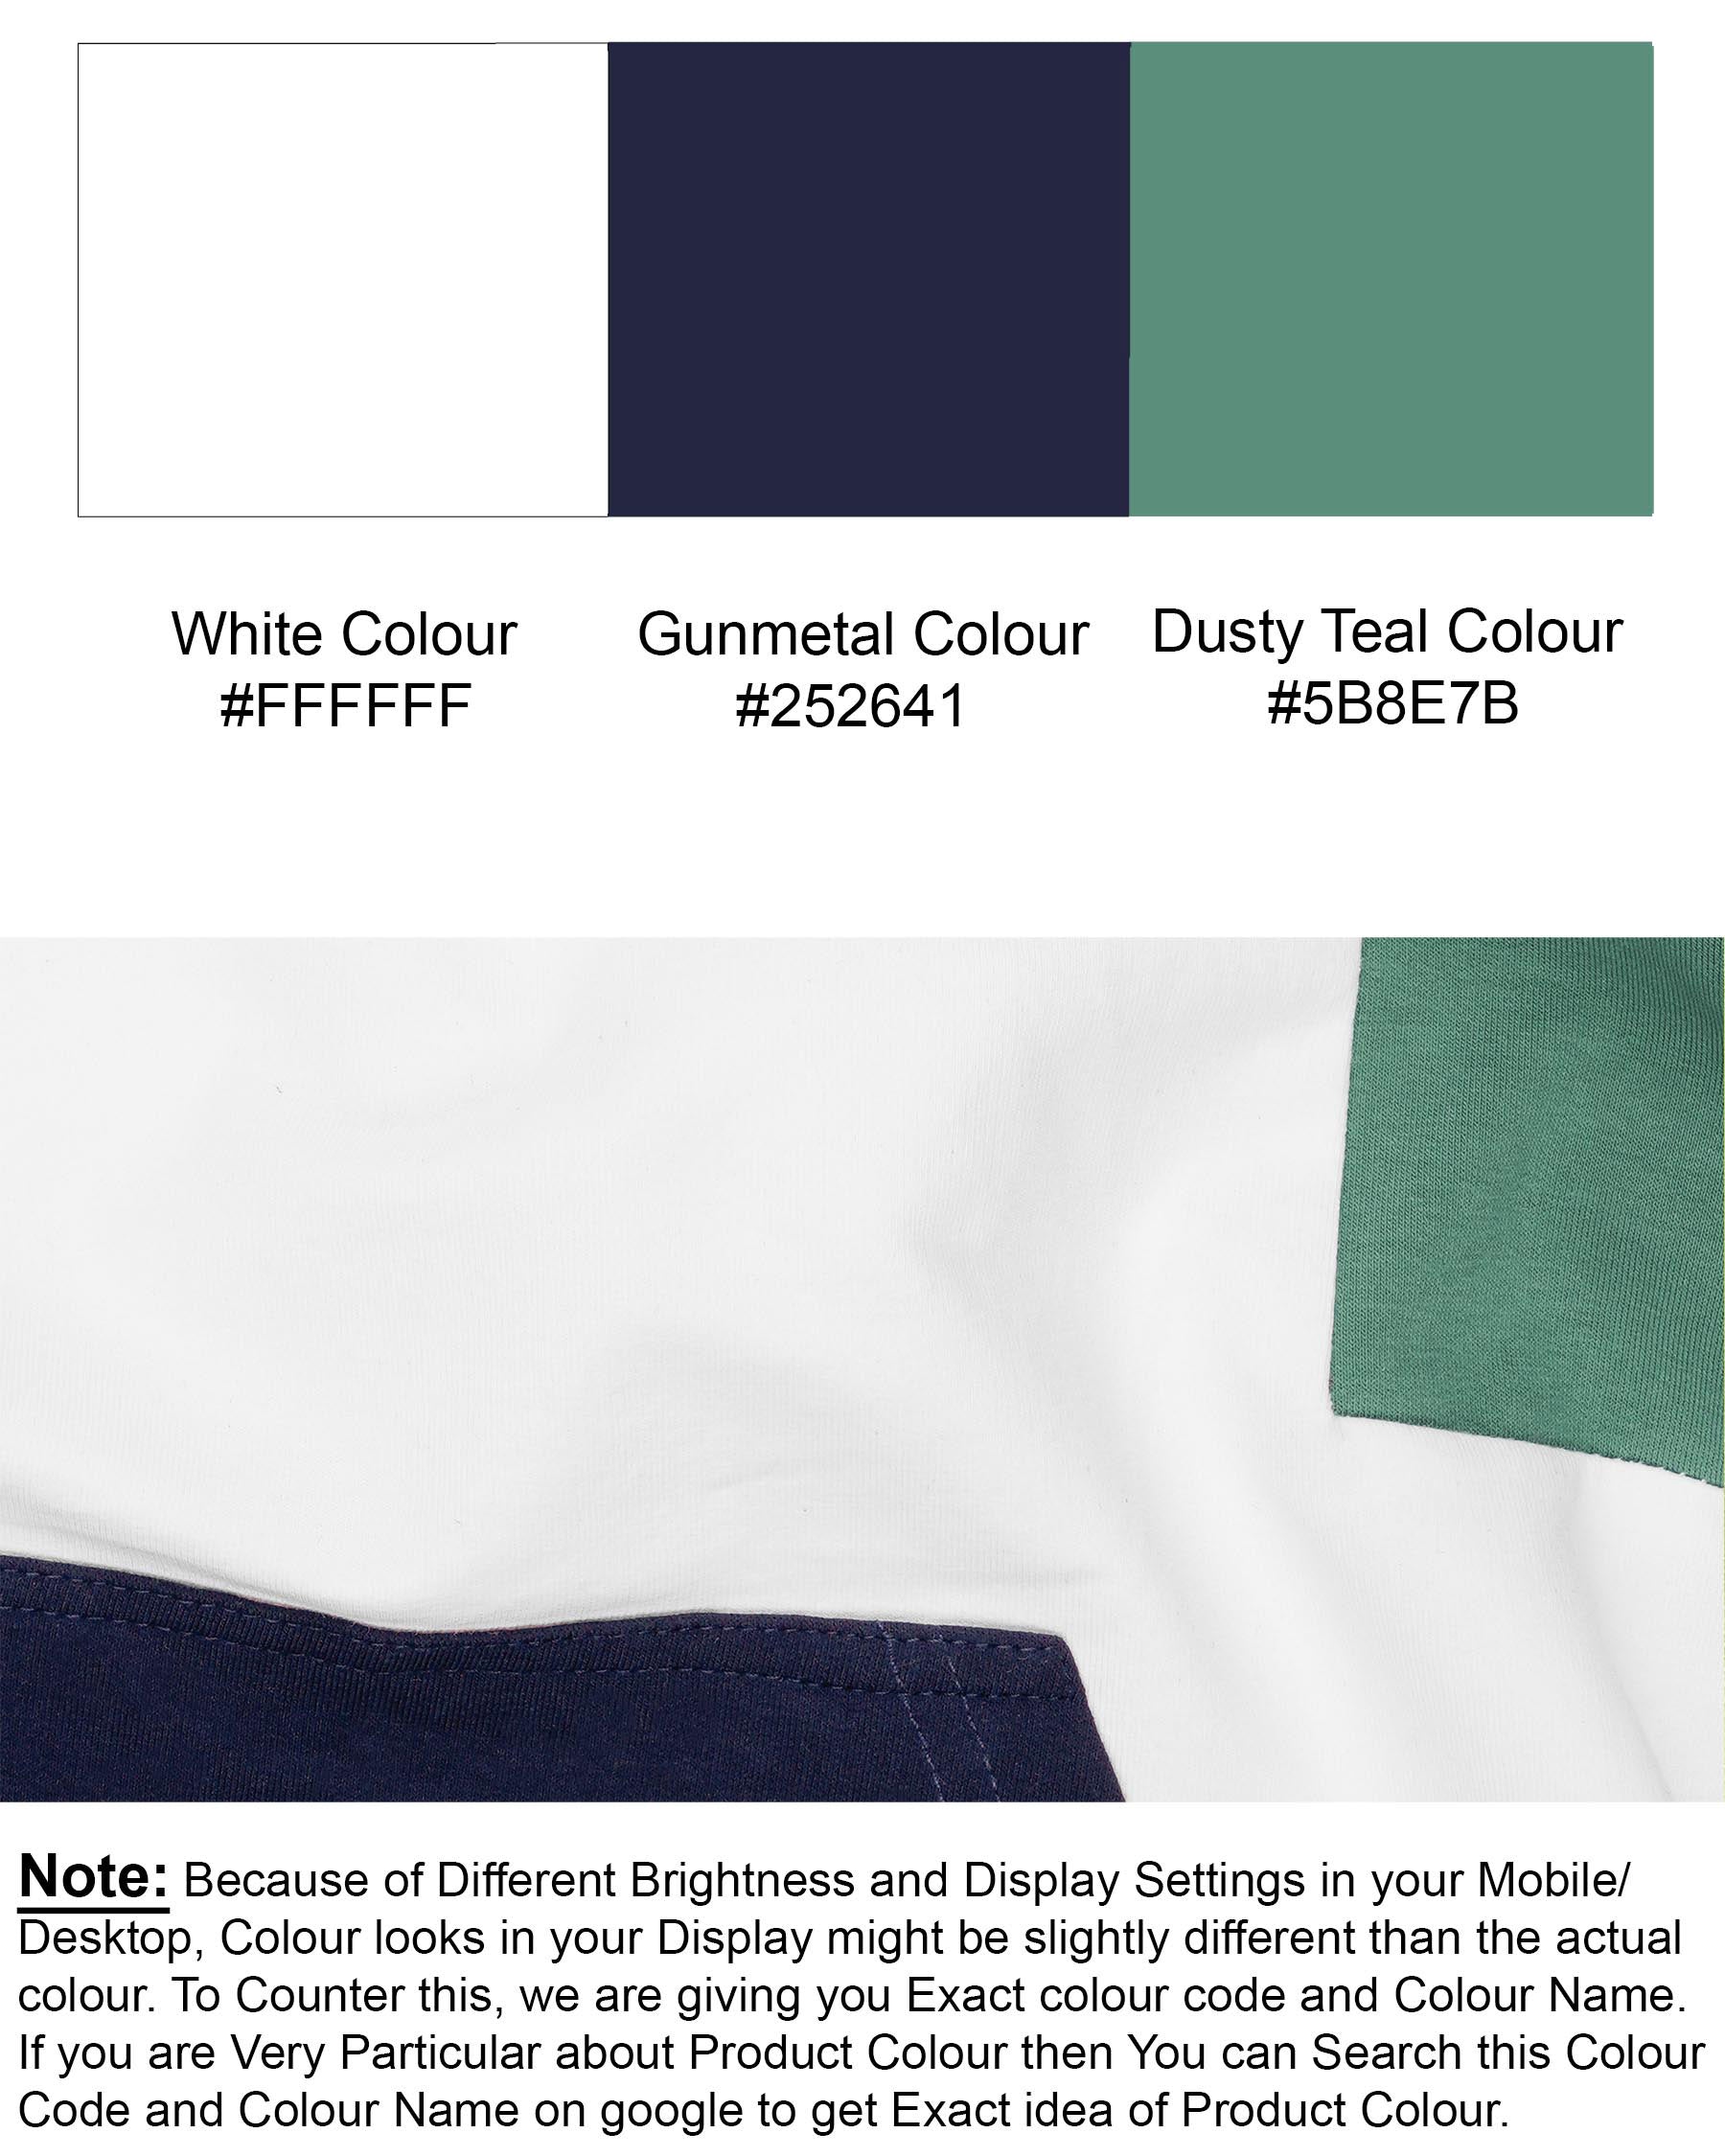 Bright White with Gunmetal Blue and Dusty Teal Green Hoodie Sweatshirt TS584-S, TS584-M, TS584-L, TS584-XL, TS584-XXL, TS584-3XL, TS584-4XL